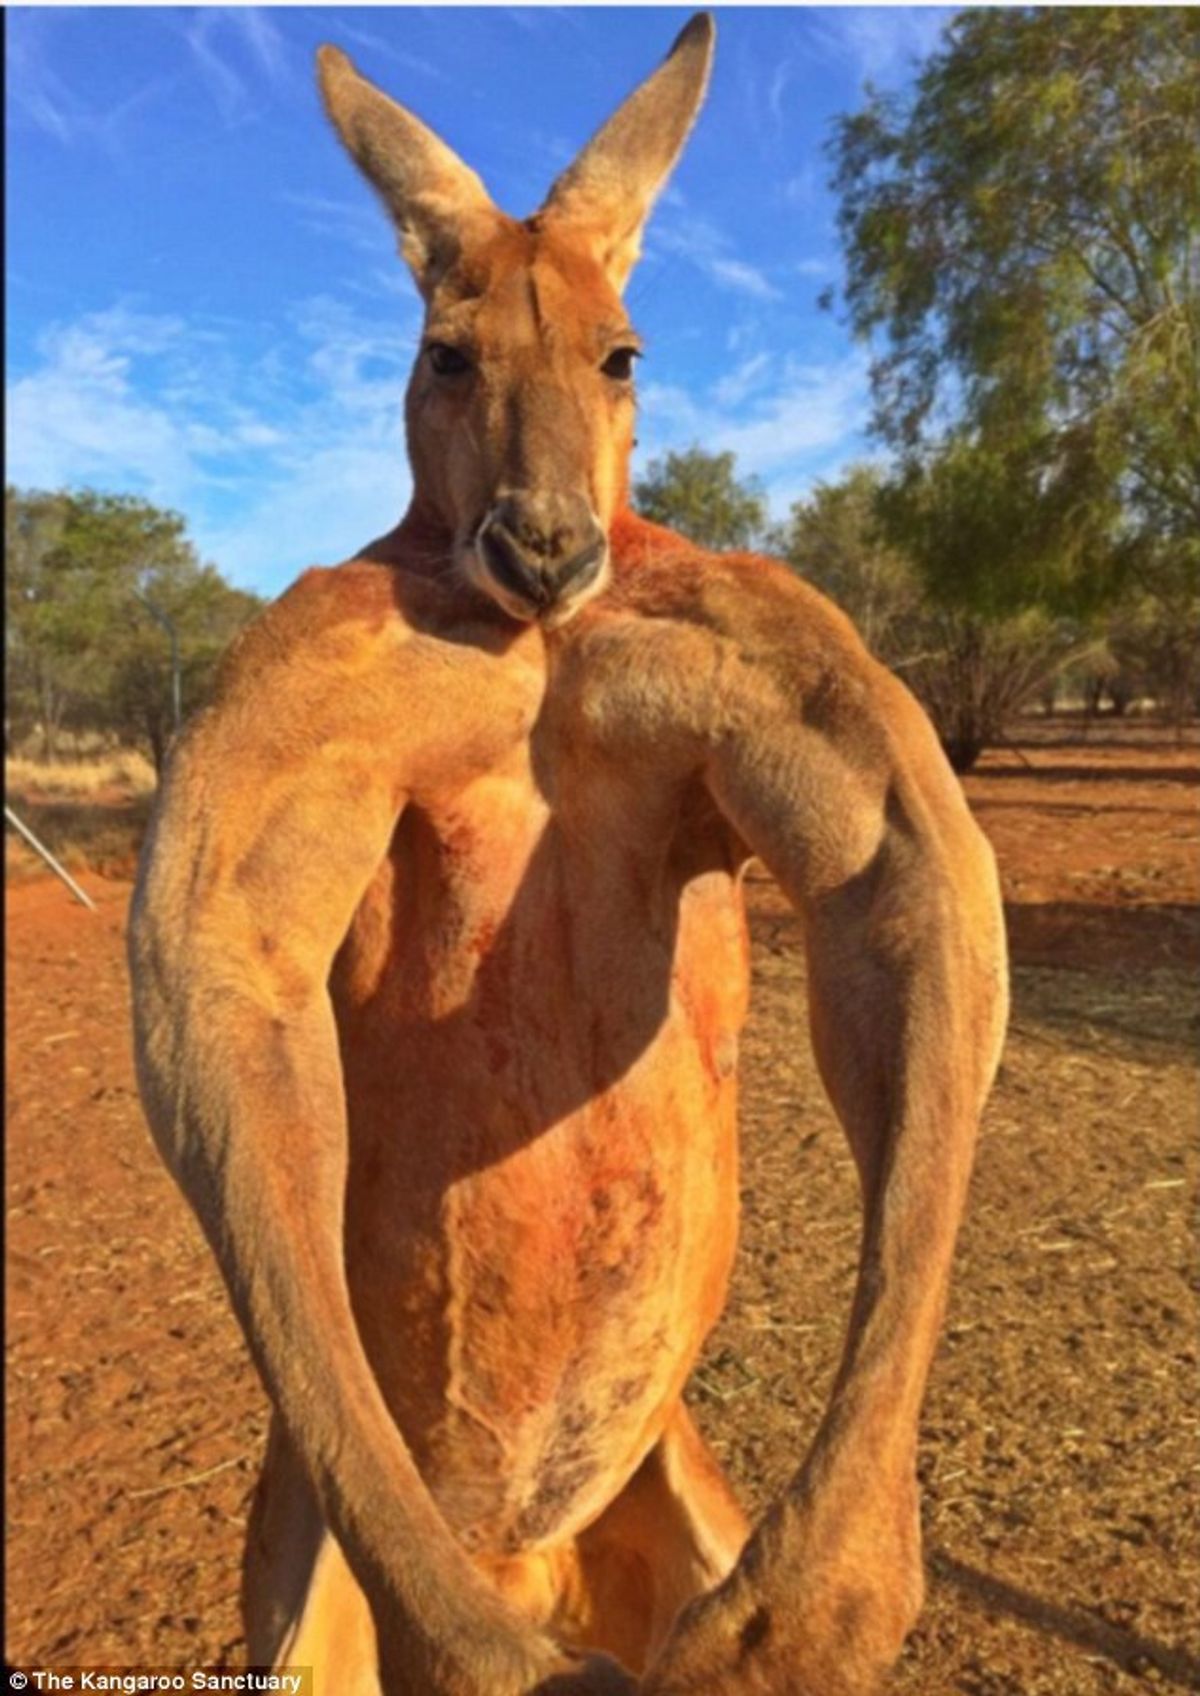 PETA vs. The Kangaroo Puncher